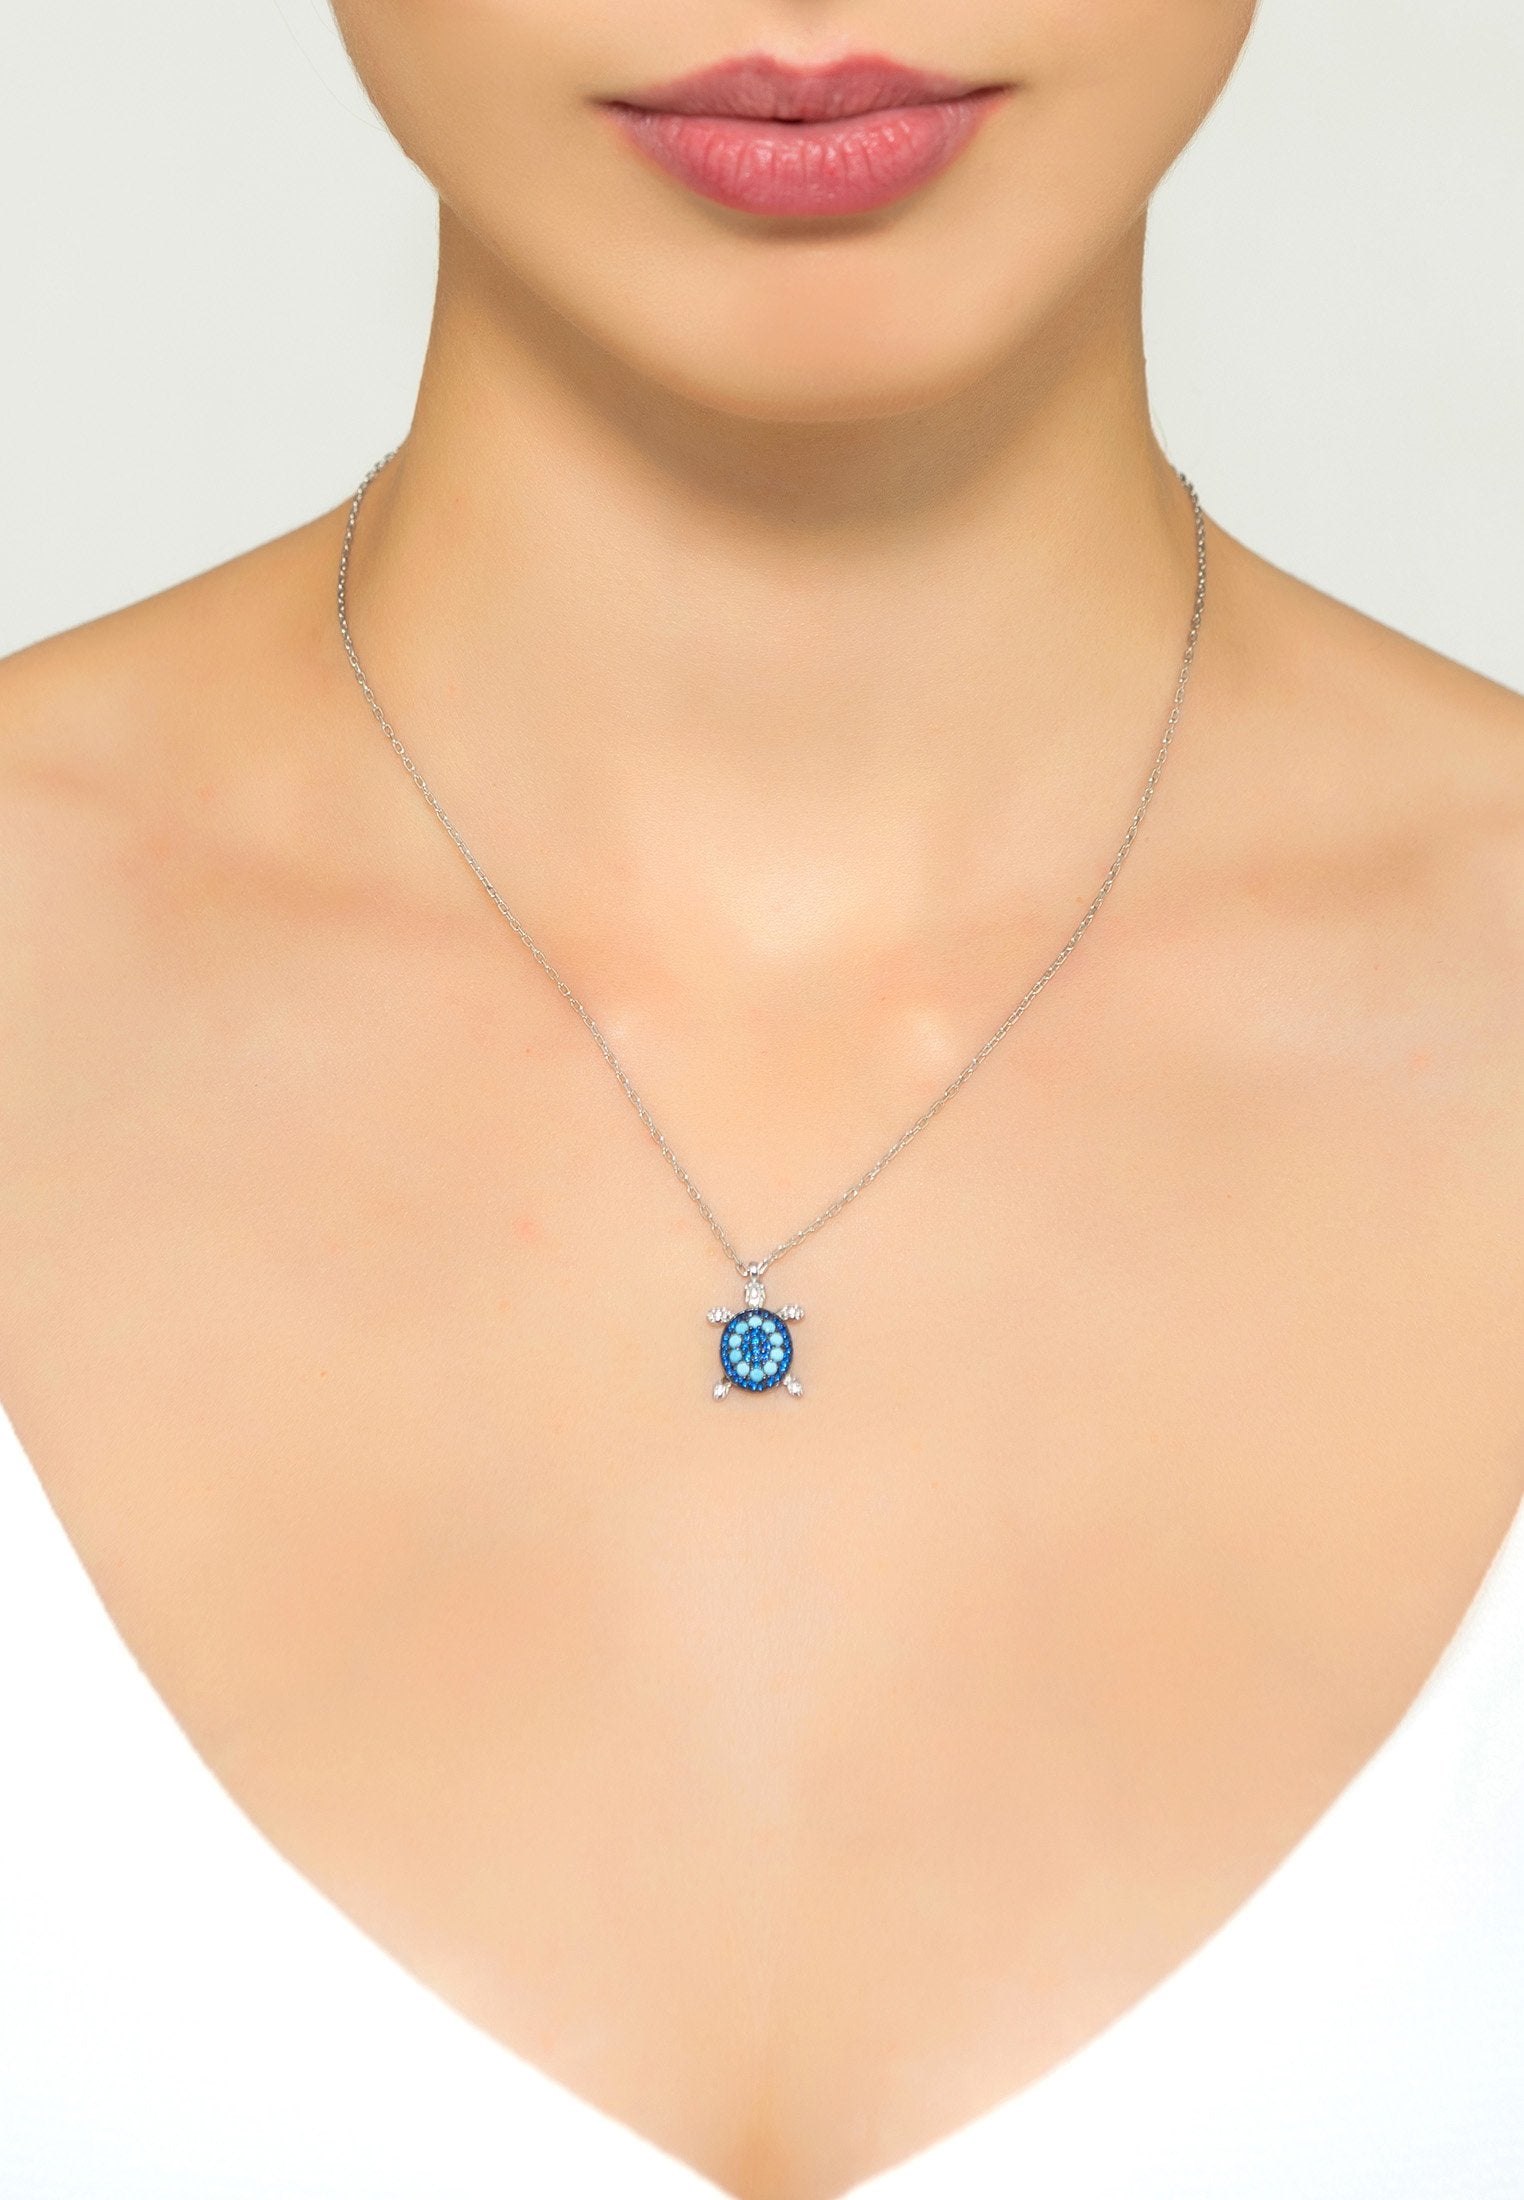 Turtle Turquoise Blue Pendant Necklace Silver